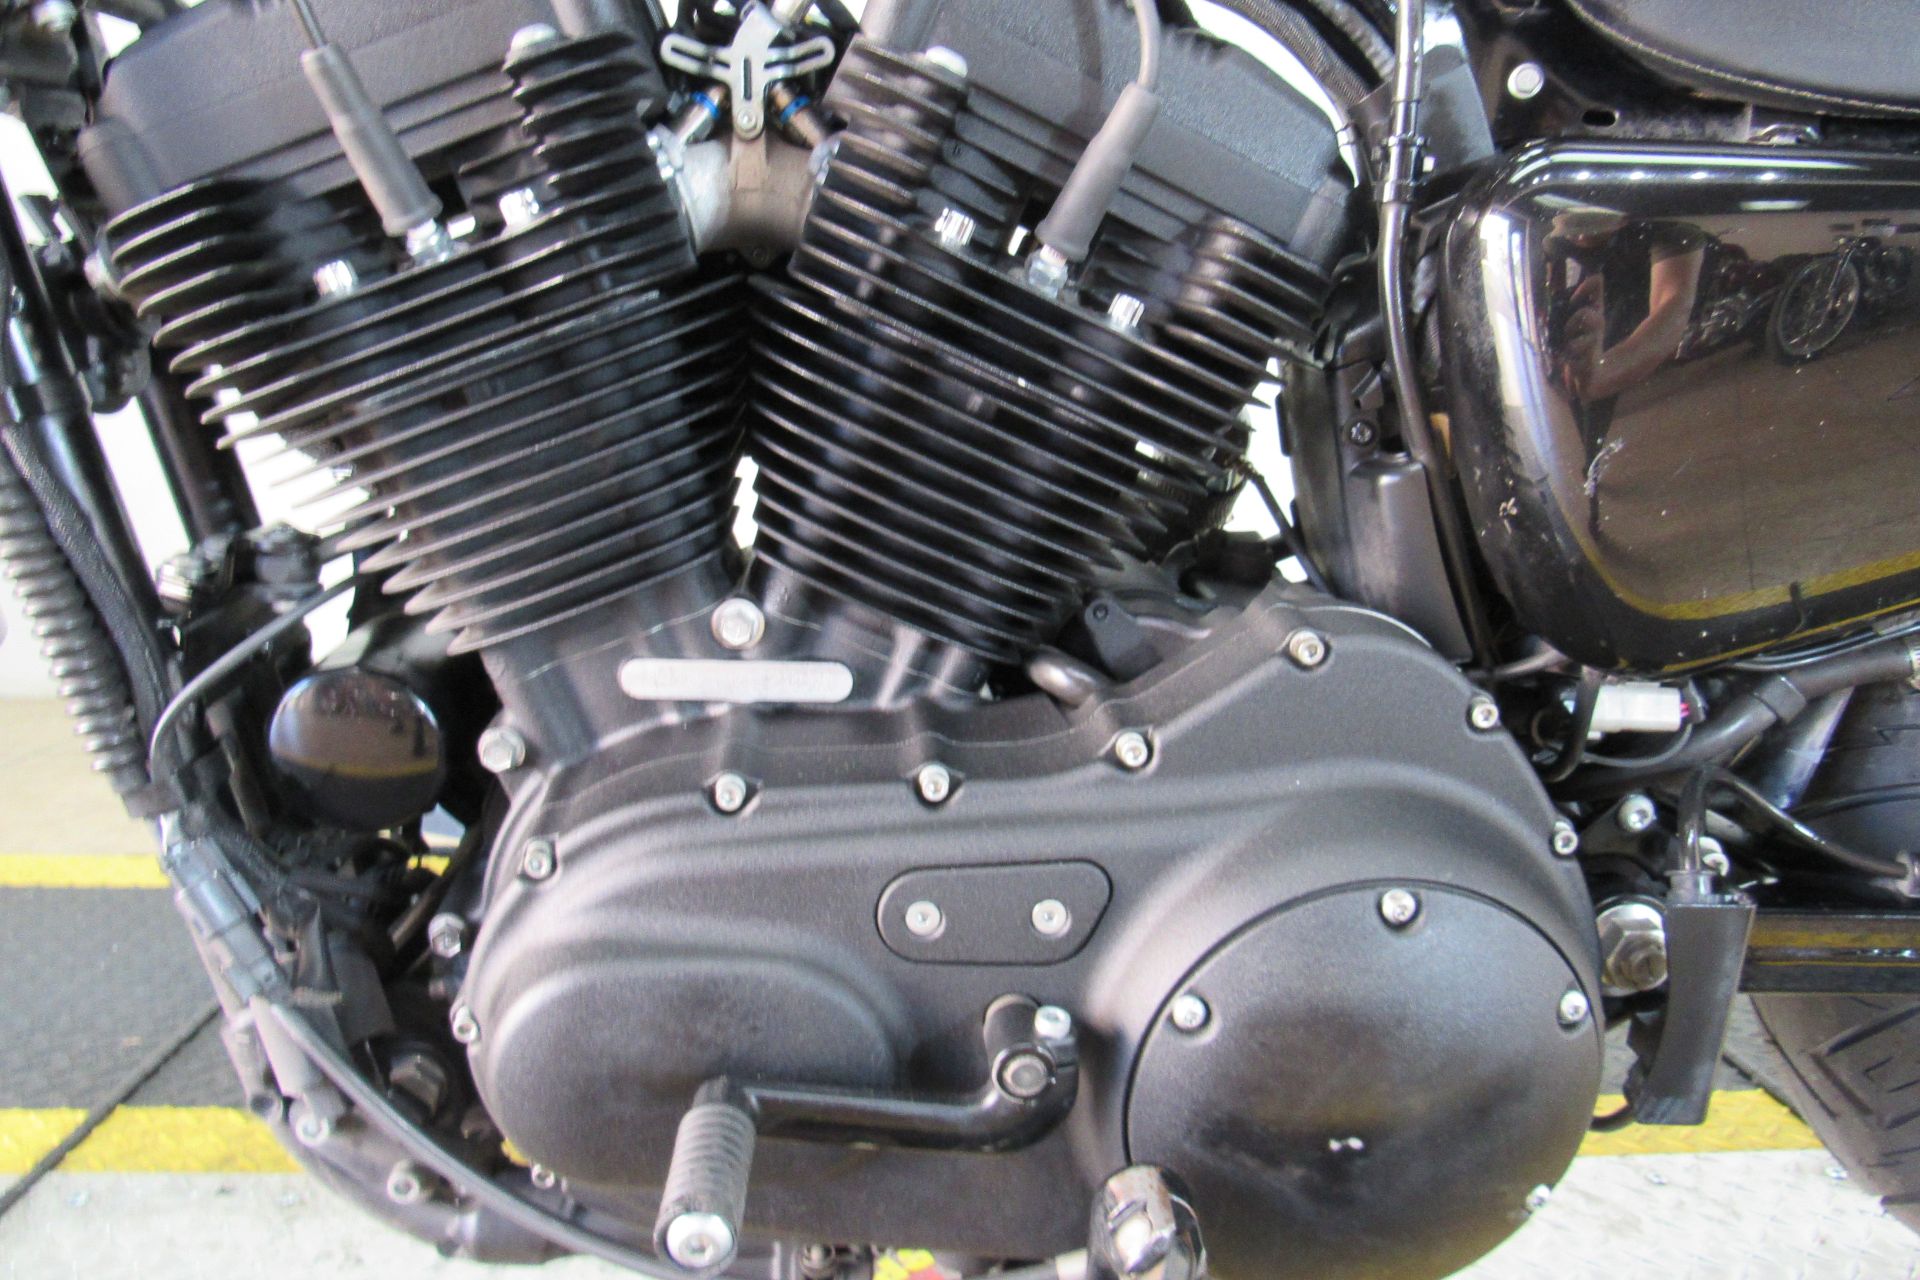 2020 Harley-Davidson Iron 1200™ in Temecula, California - Photo 12